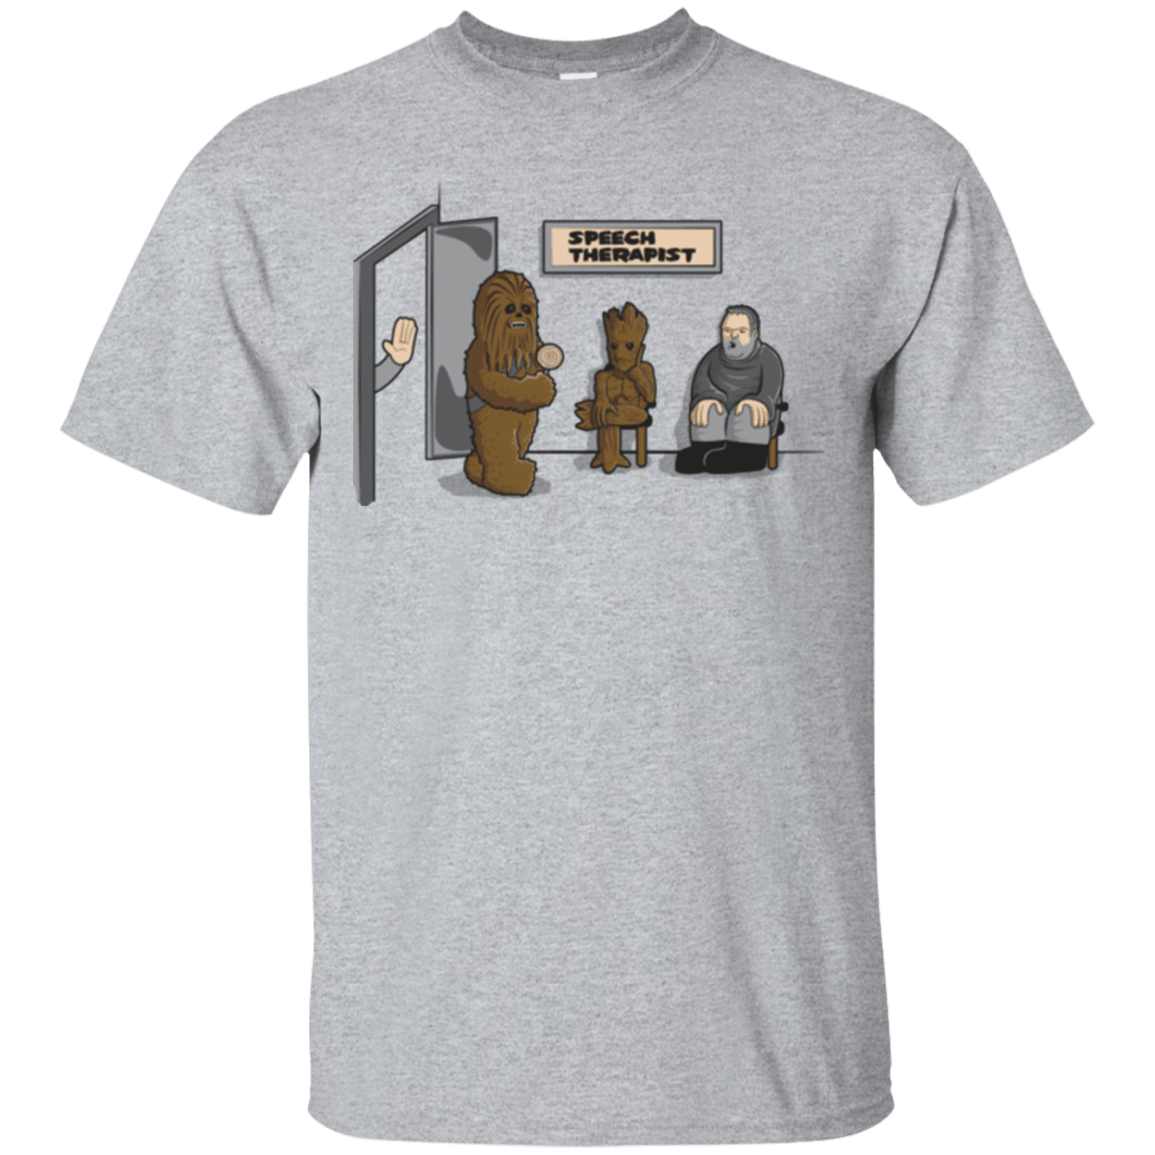 T-Shirts Sport Grey / S Speech Therapist T-Shirt